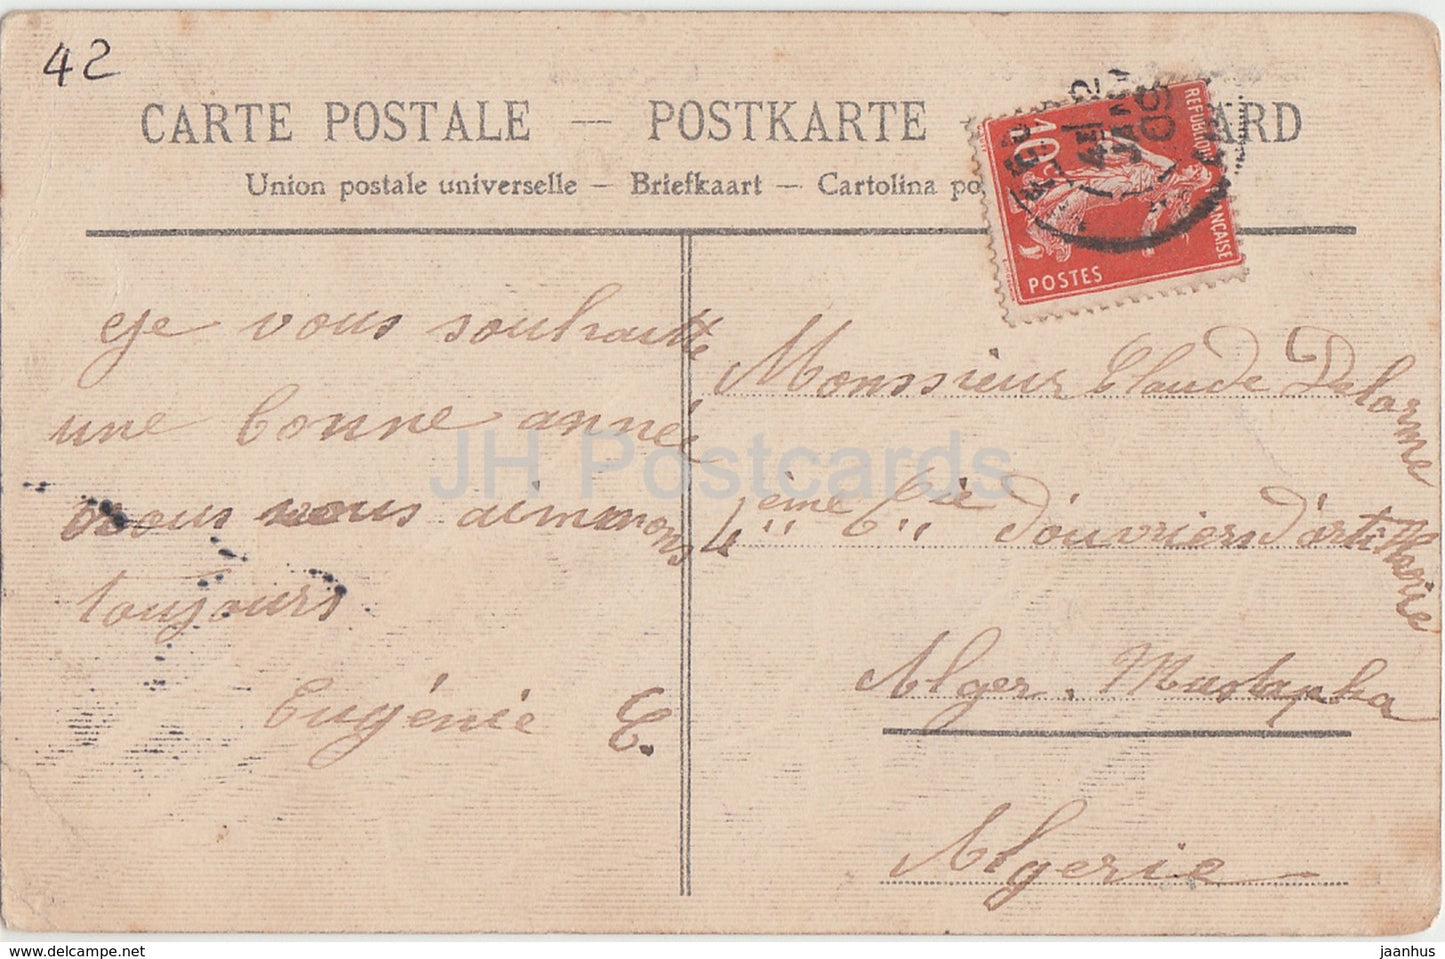 St Marcel de Felines - pres Balbigny - Le Chateau - castle - old postcard - 1909 - France - used